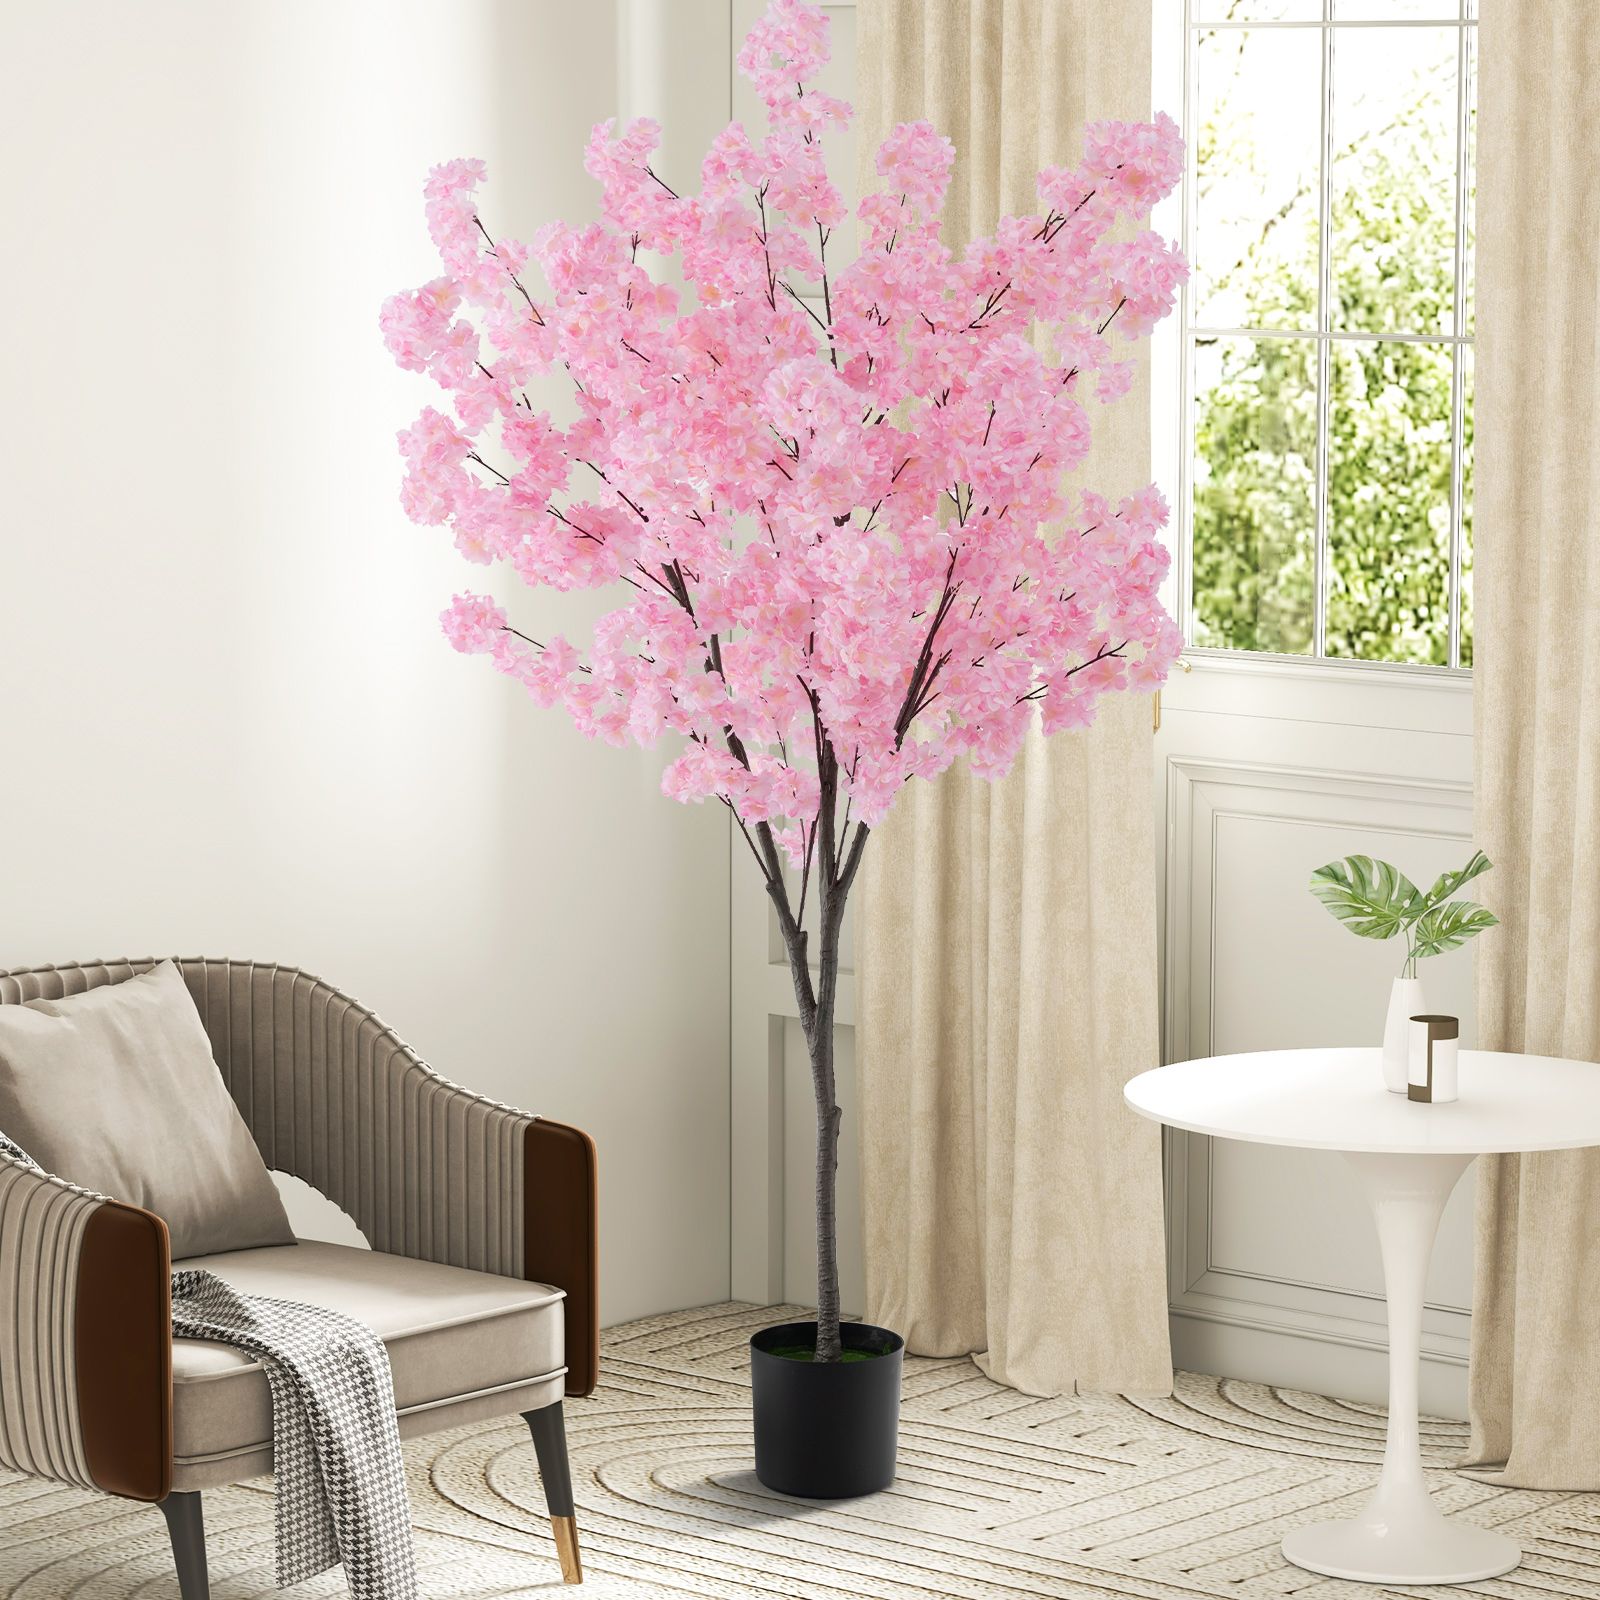 190cm Tall Artificial Cherry Blossom Tree